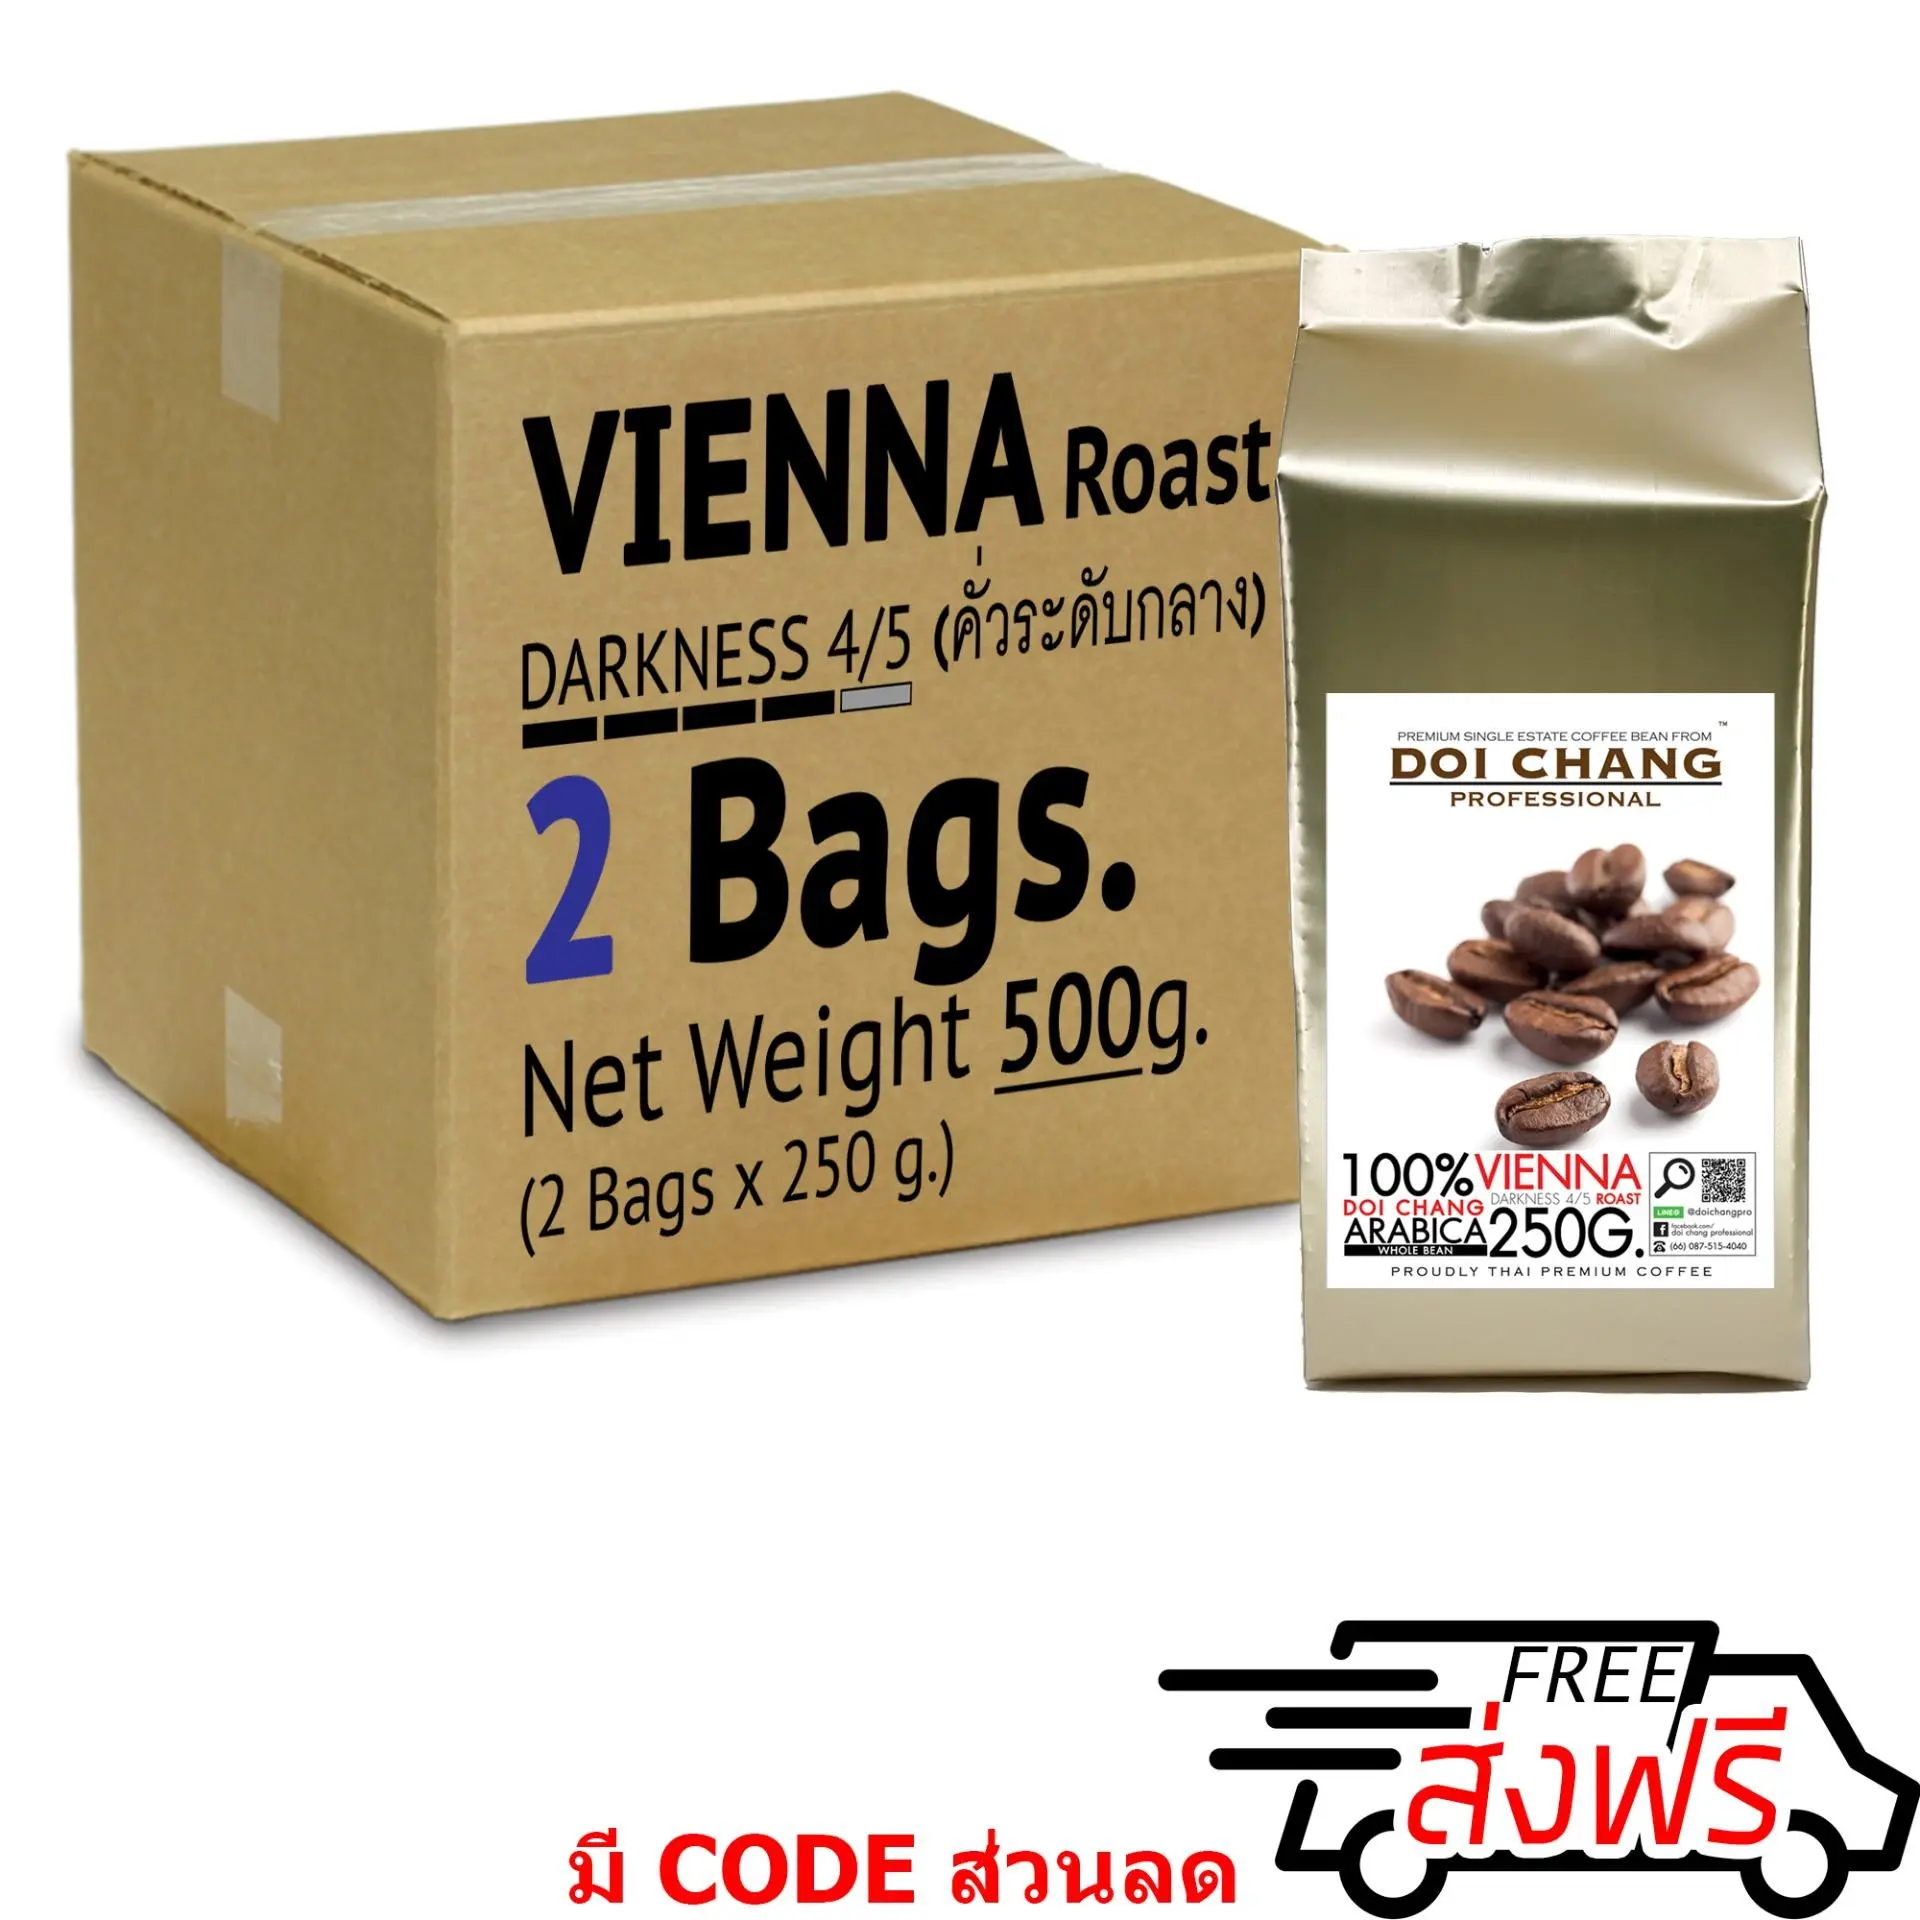 Doi Chang Professional กาแฟ คั่วระดับกลาง Vienna Roast (2ถุง x 250g.) สำหรับ เครื่องชงกาแฟ เครื่องบดกาแฟ